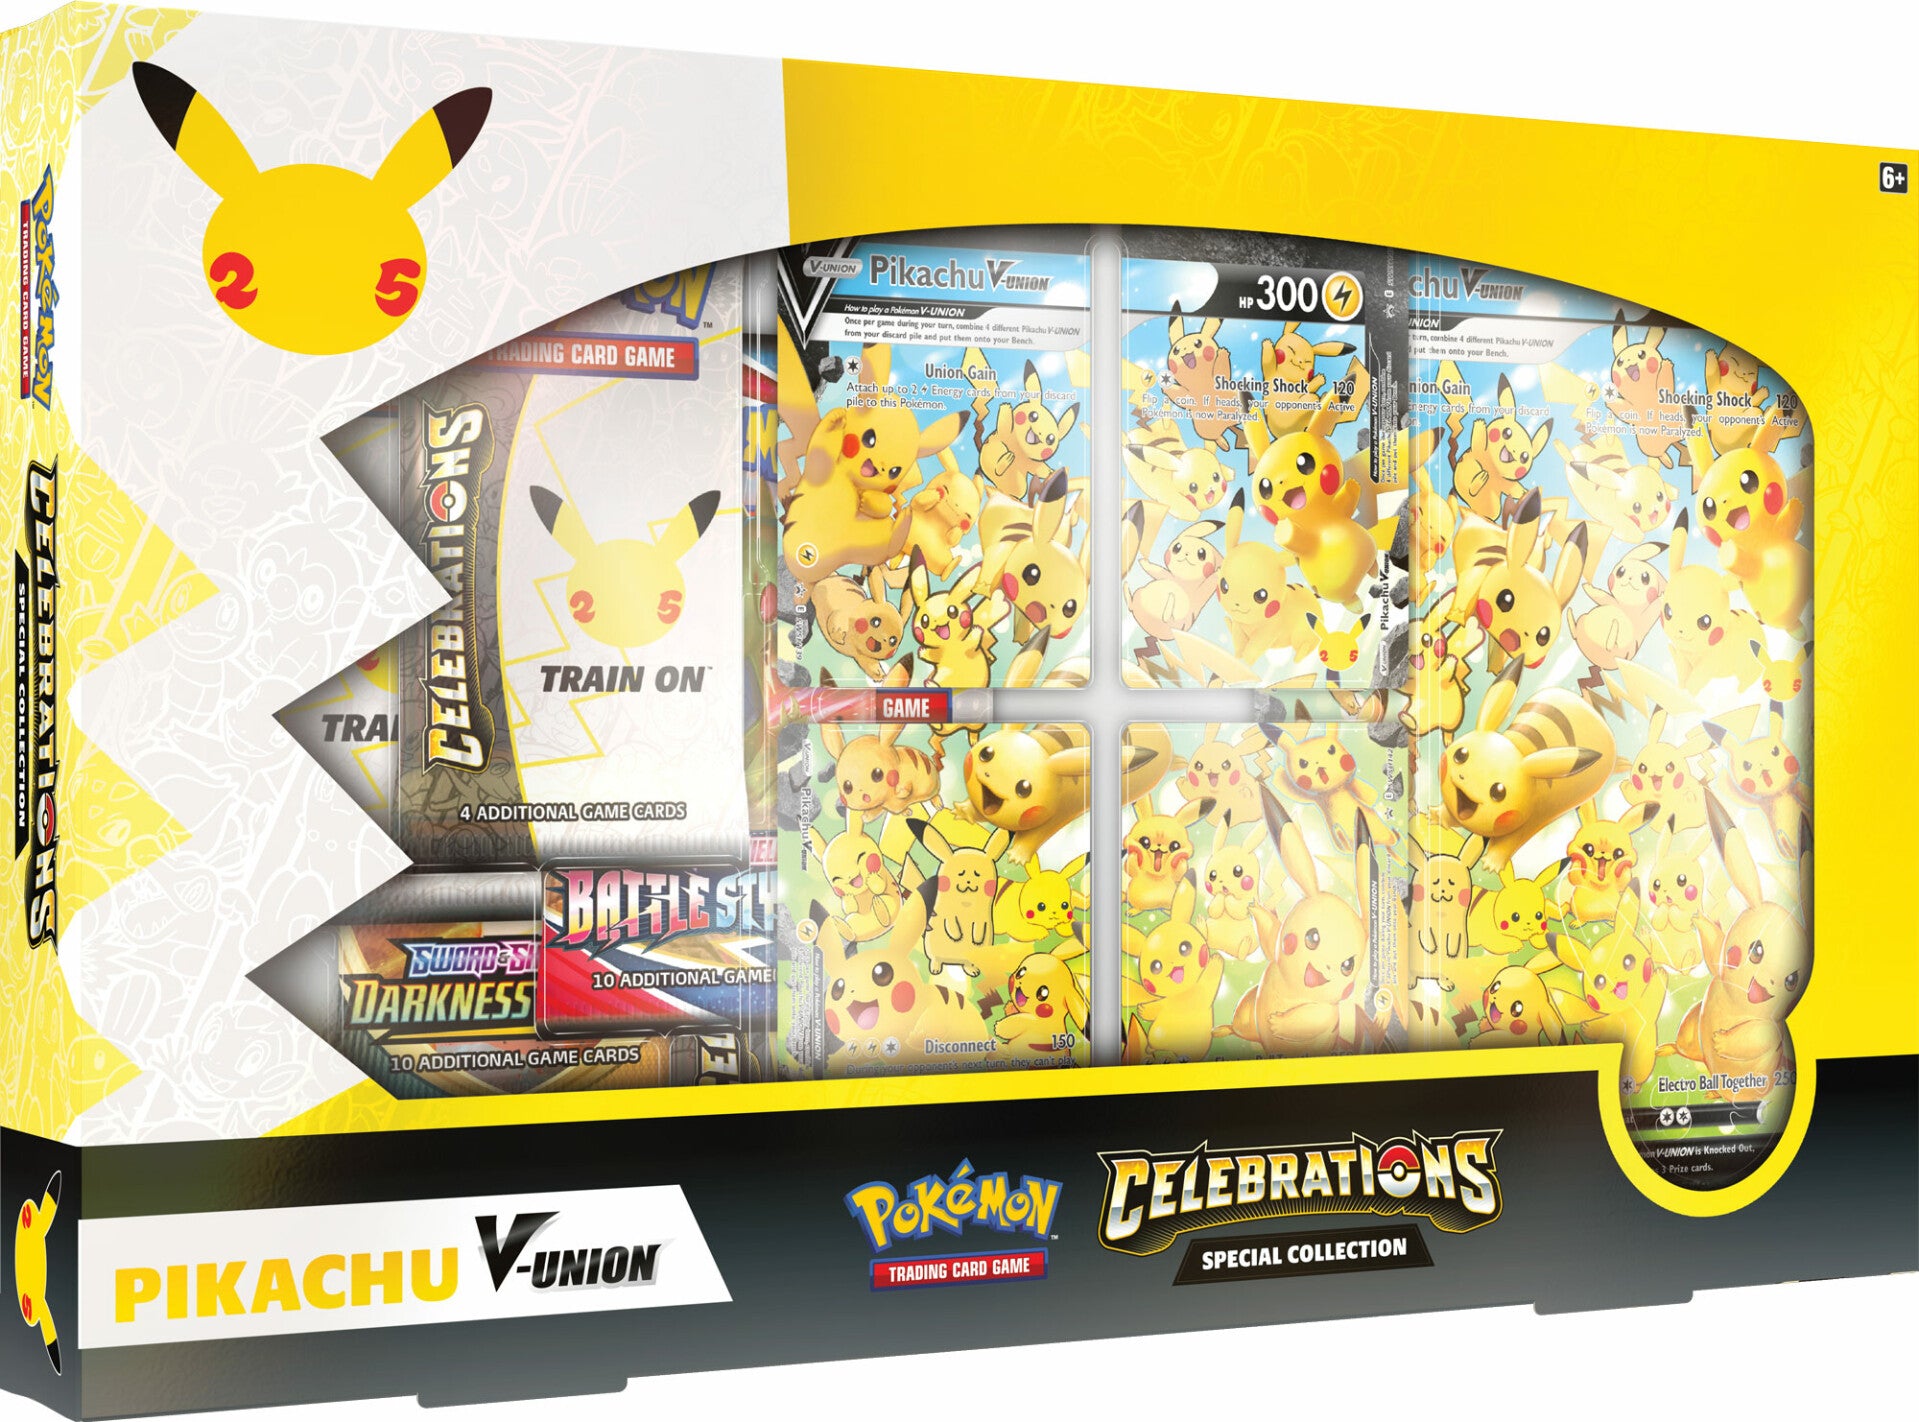 Celebrations Special Collection—Pikachu V-UNION